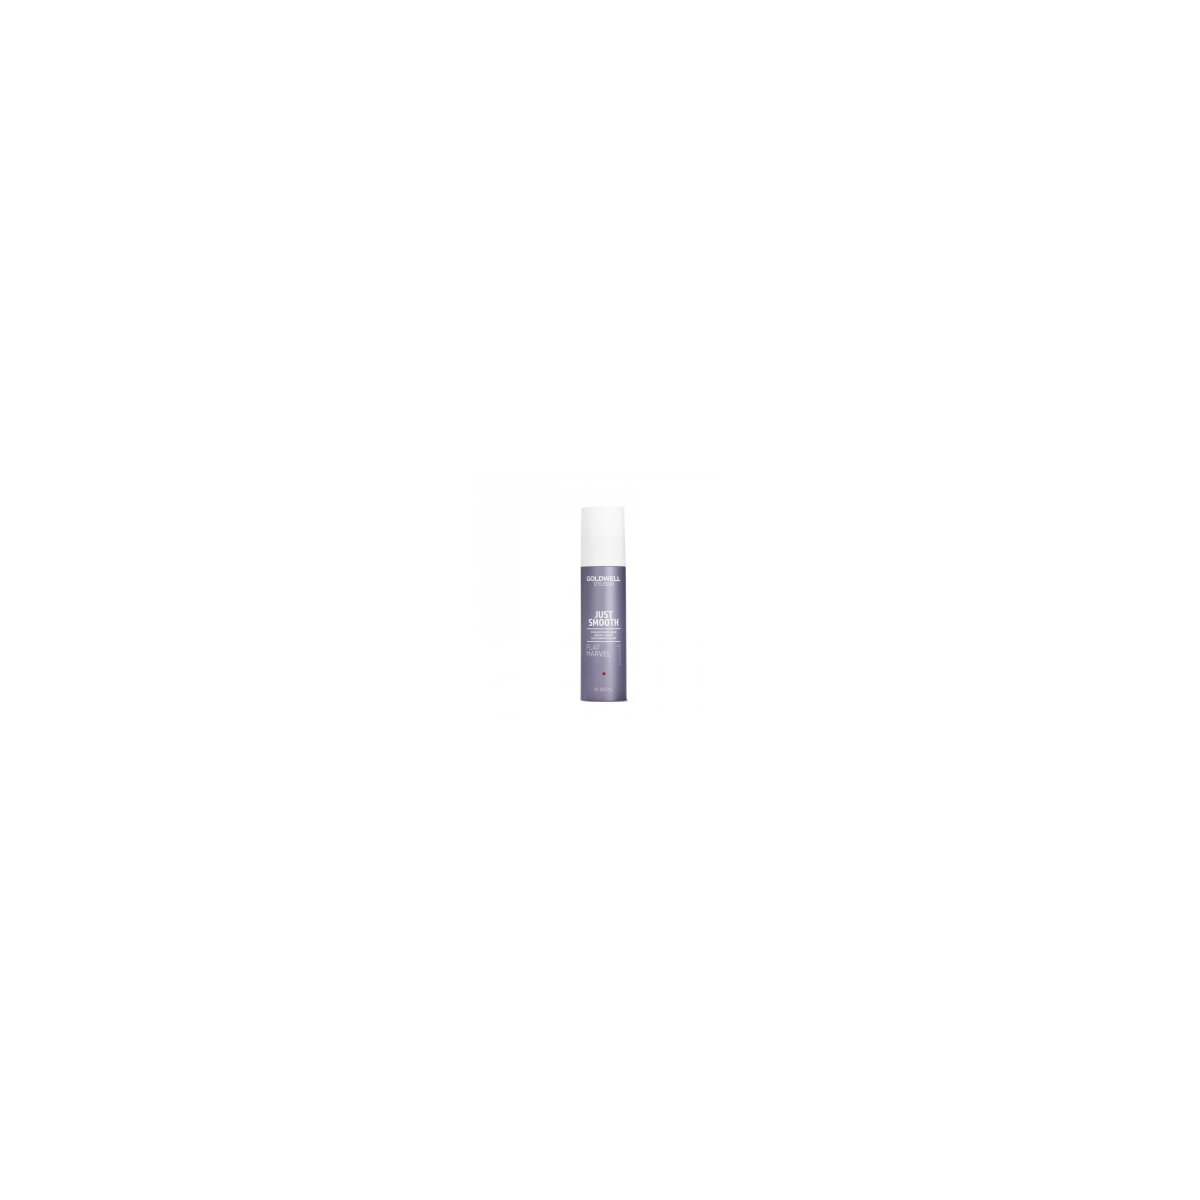 GOLDWELL - STYLESIGN - JUST SMOOTH - FLAT MARVEL 1 (100ml) Balsamo lisciante senza risciacquo